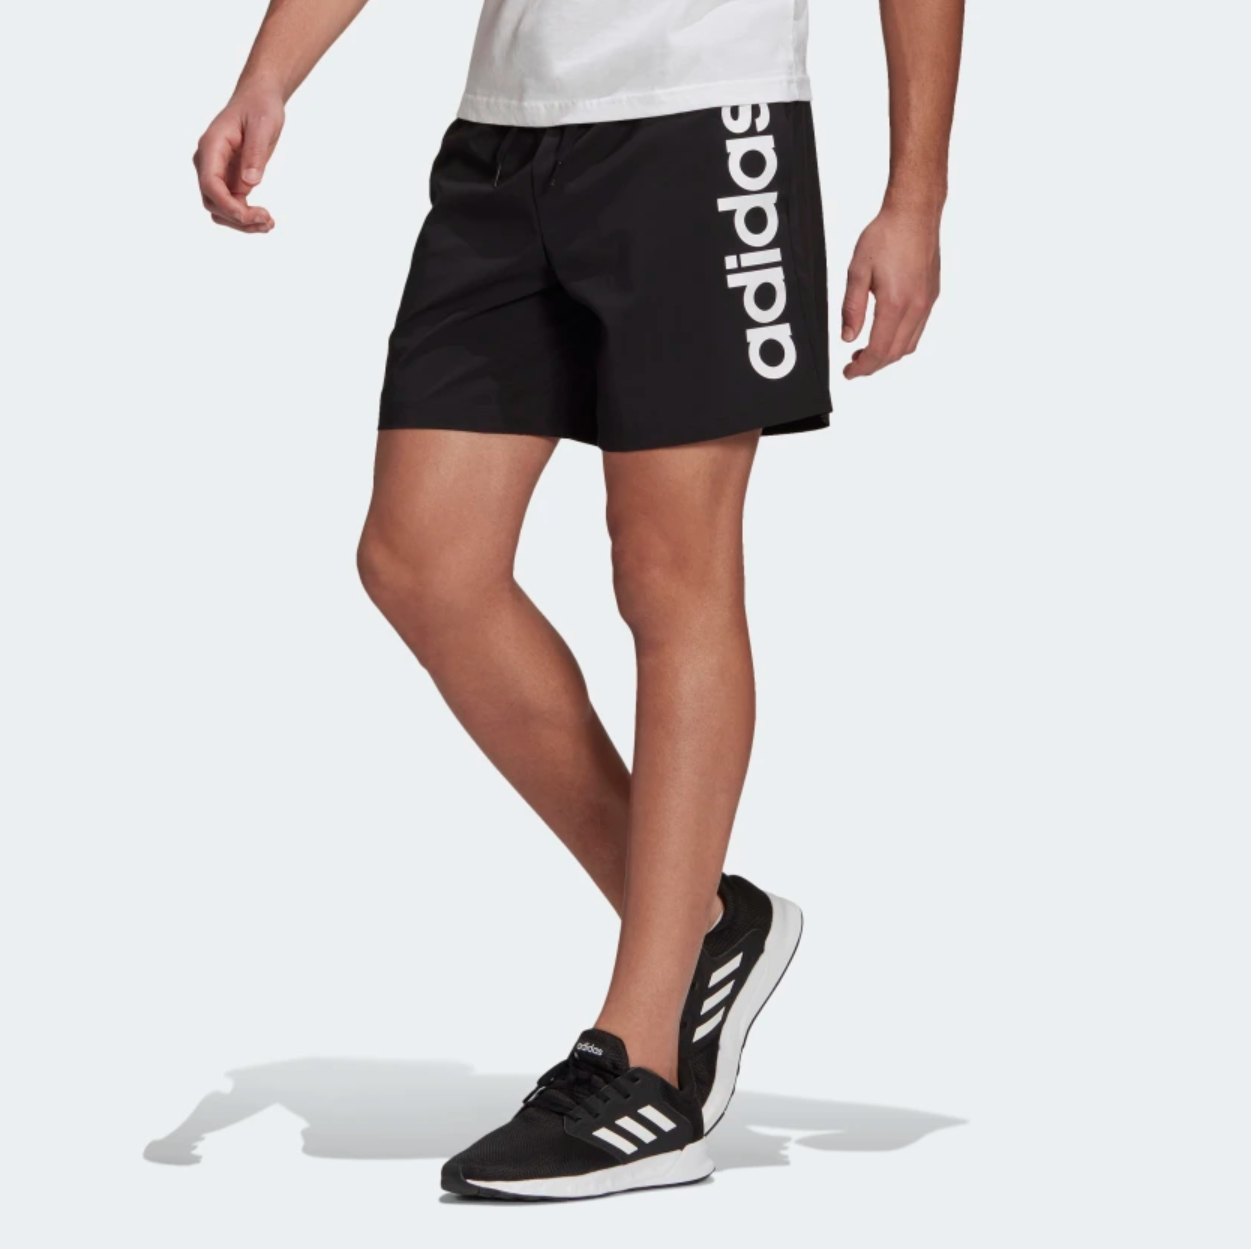 Adidas AEROREADY Essentials Chelsea Linear Logo Shorts Black/White GK9607 Sportstar Pro Newcastle, NSW 2300 Australia. 1